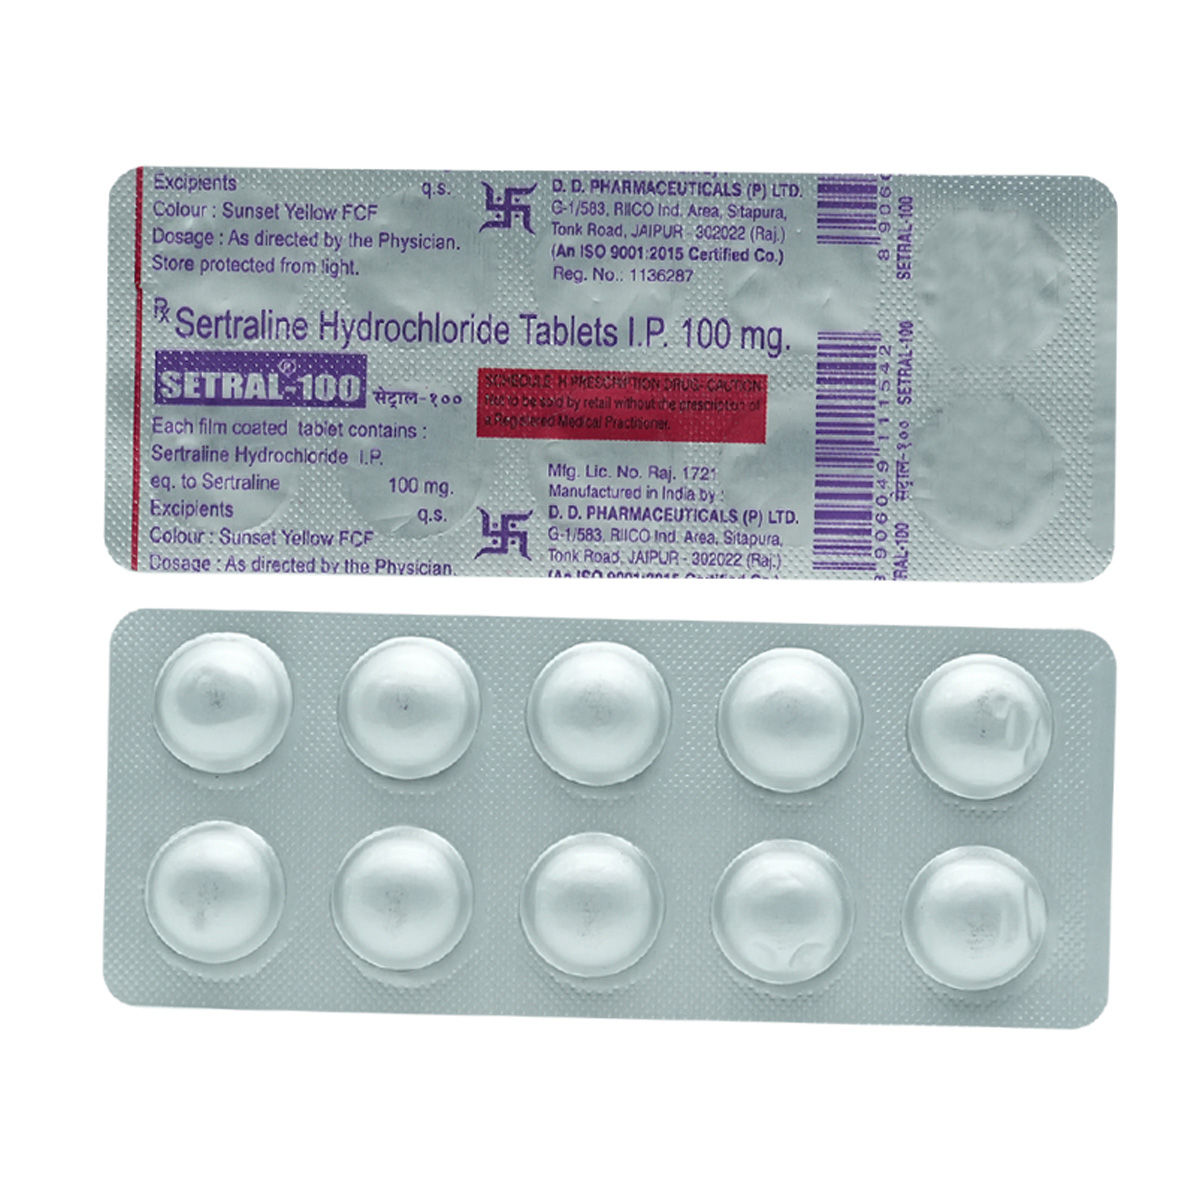 Buy Setral 100 mg Tablet 10's Online